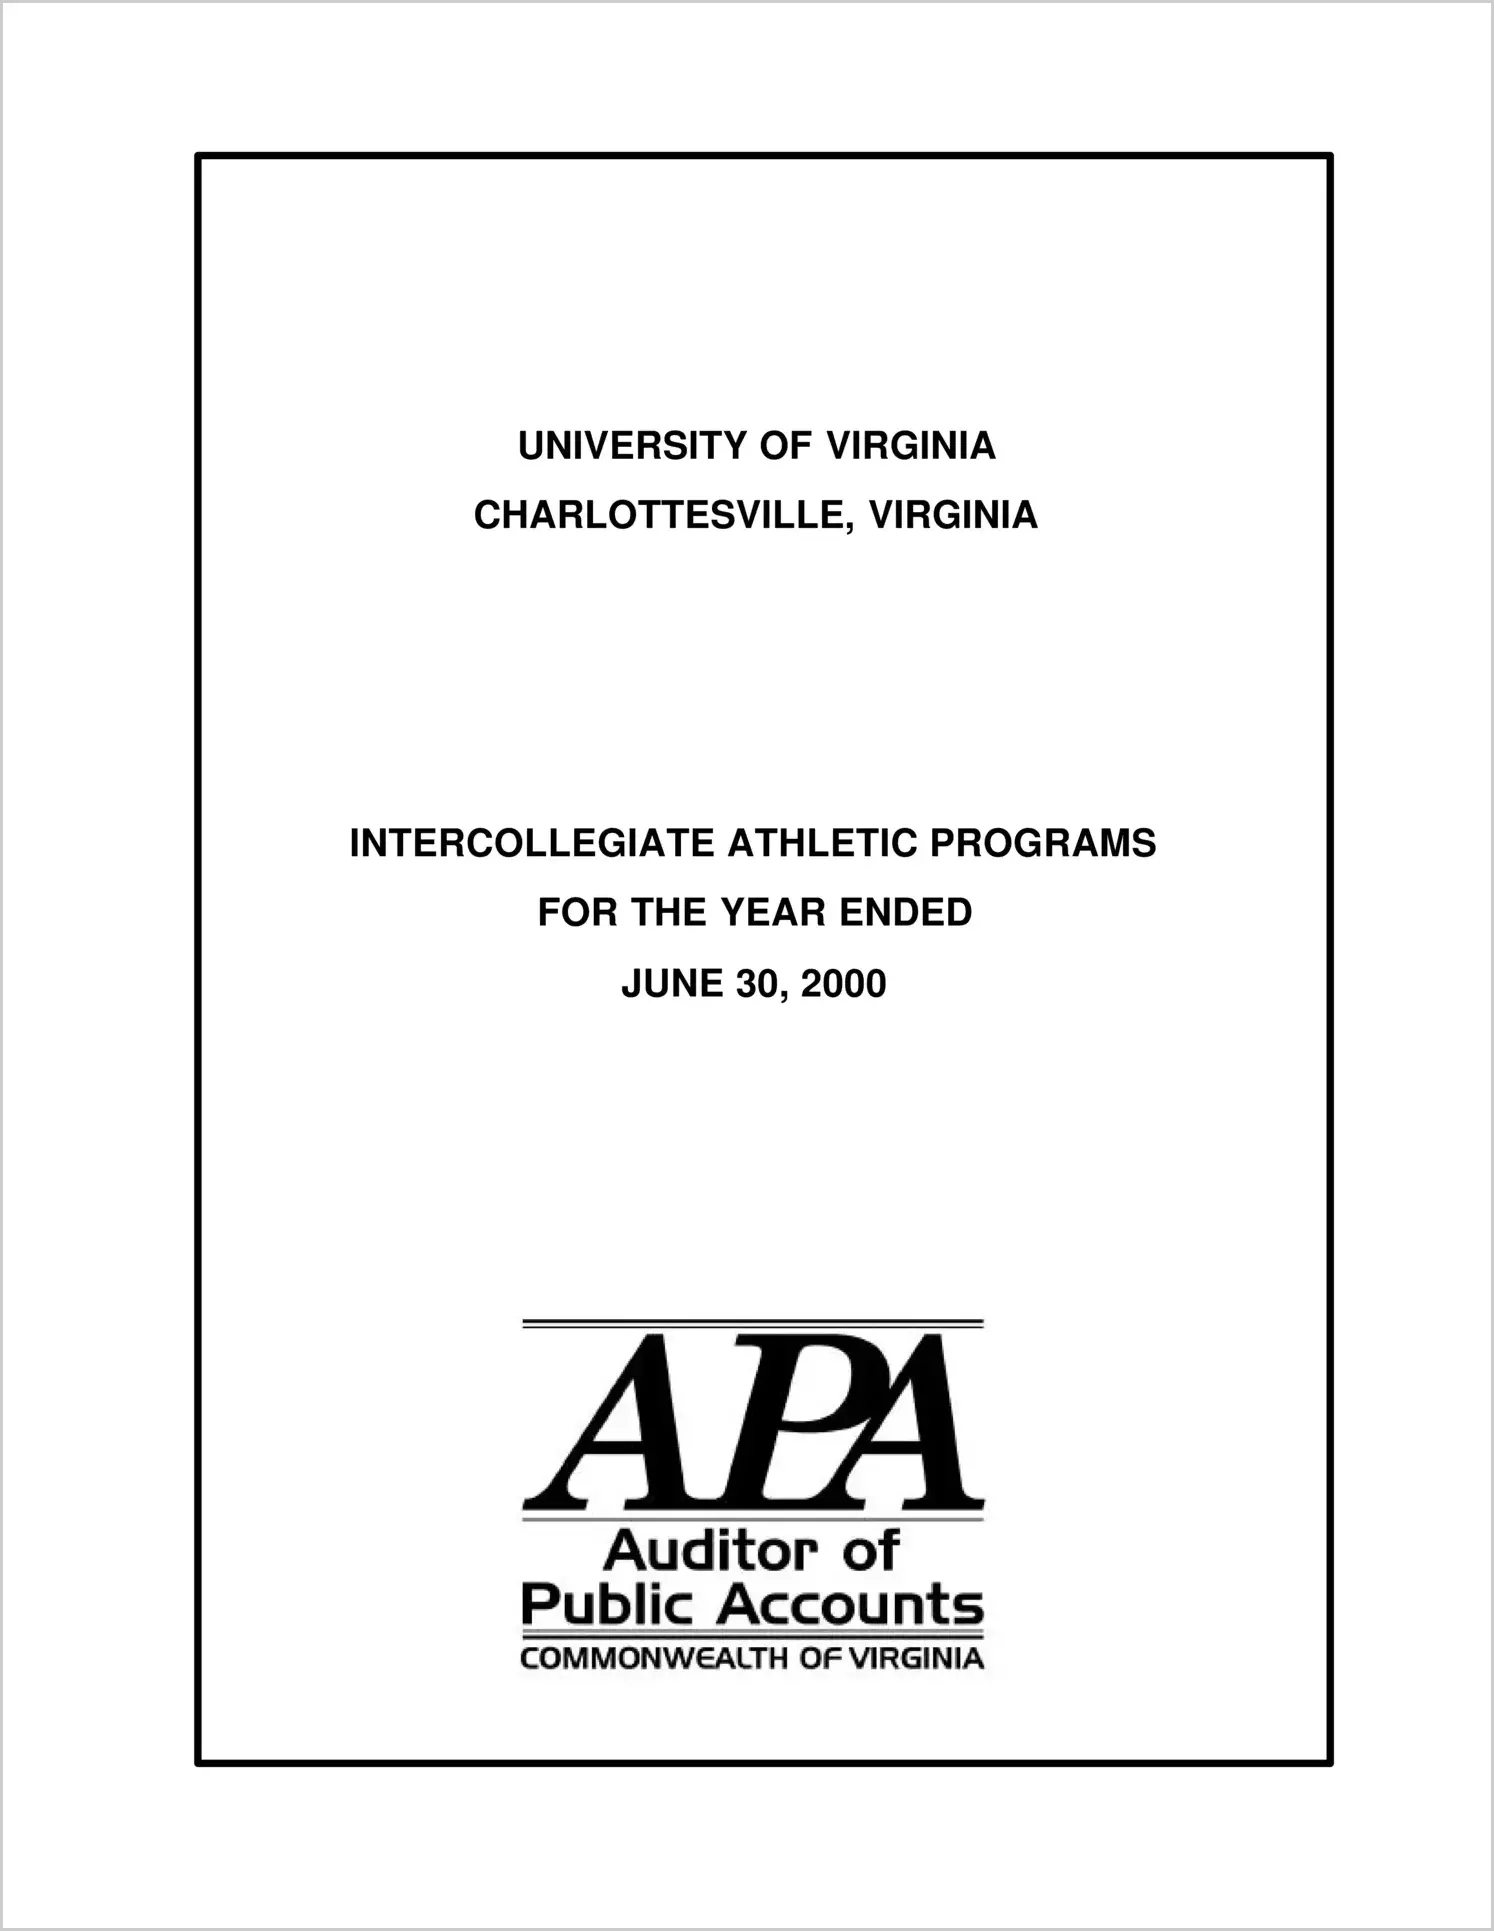 University of Virginia Intercollegiate Athletics Programs for the year ended June 30, 2000